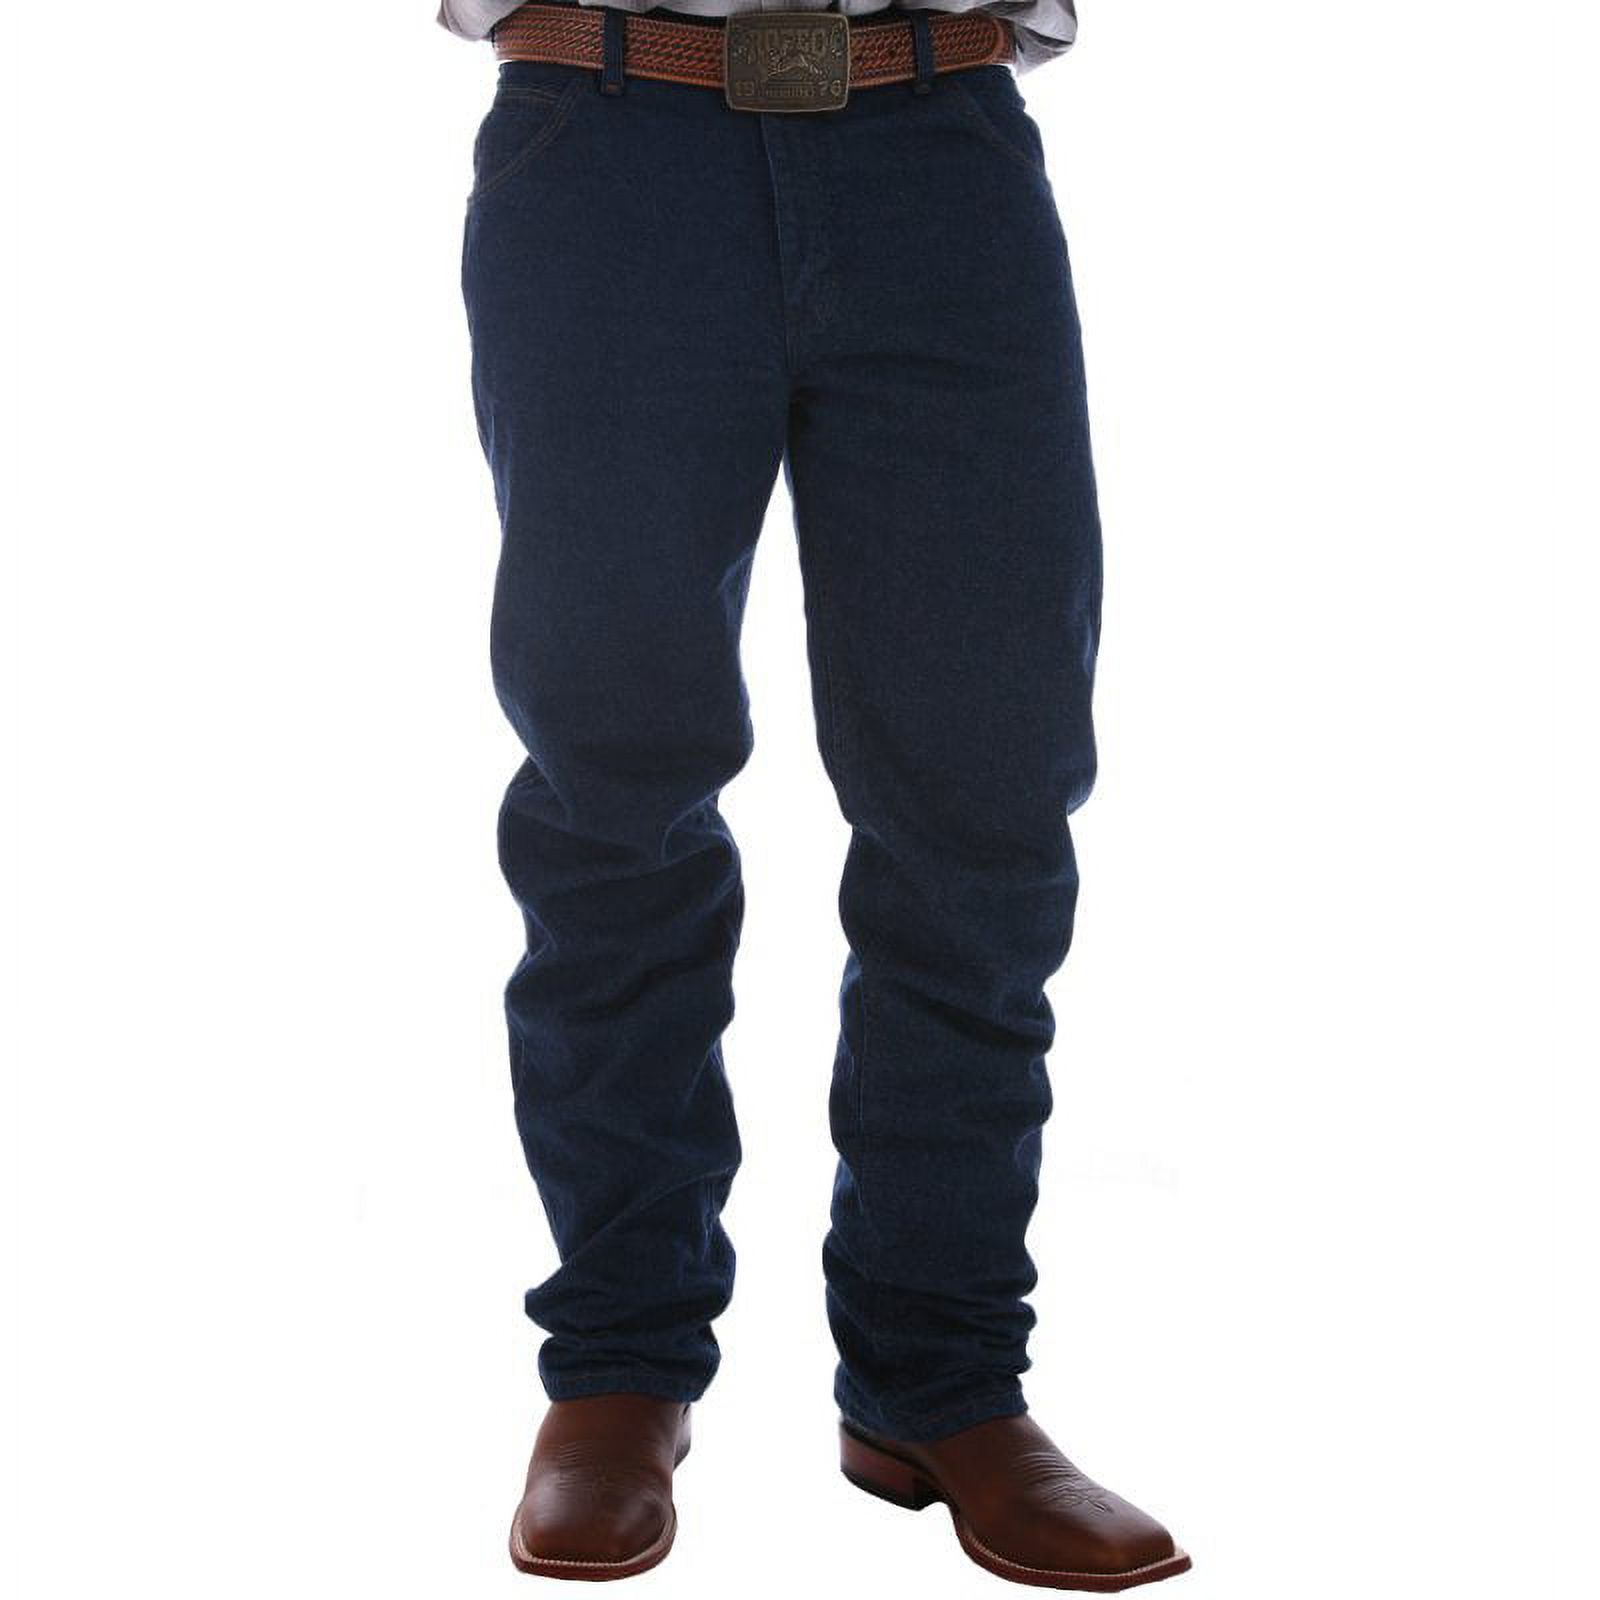 Wrangler Men's 47Mwz Premium Performance Cowboy Cut Regular Fit Prewashed Jeans Indigo 34W x 34L  US - image 2 of 4